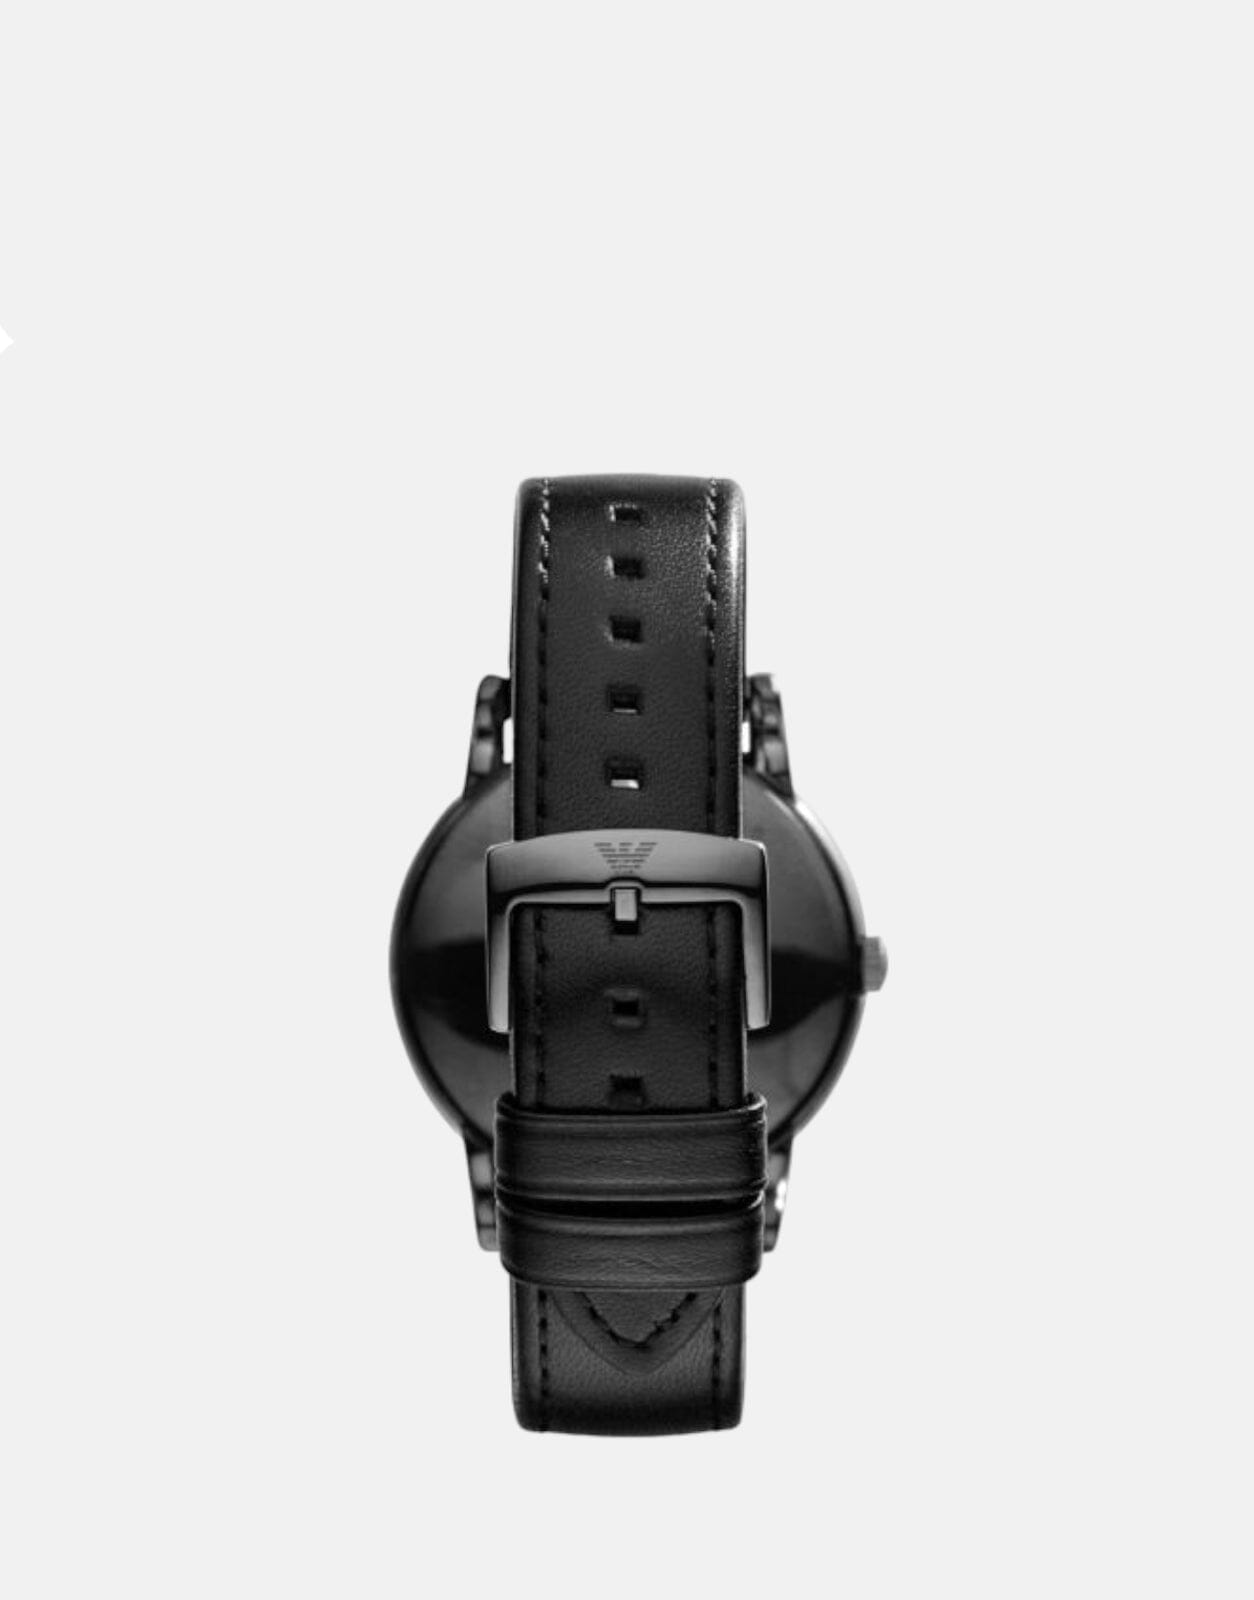 Armani Exchange GT RD Watch - Subwear